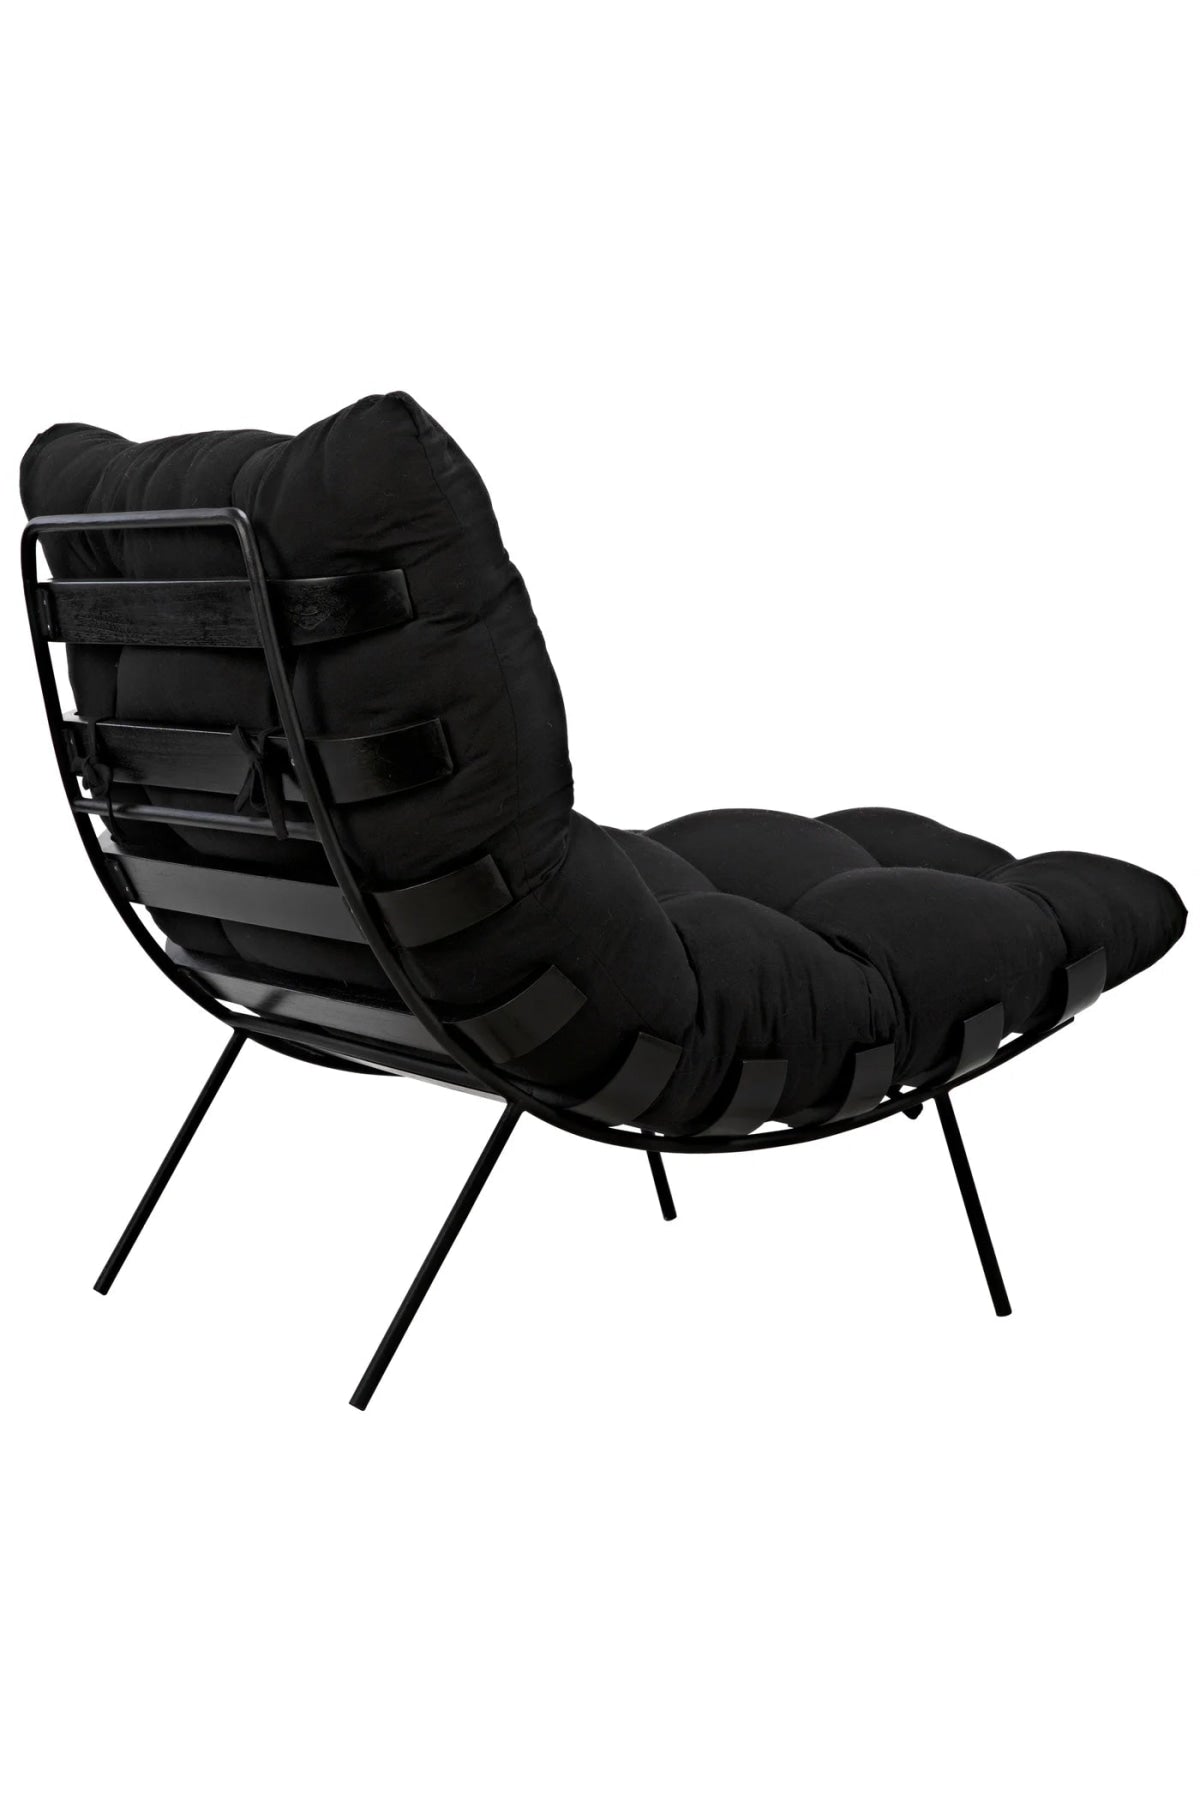 Henzo Chair